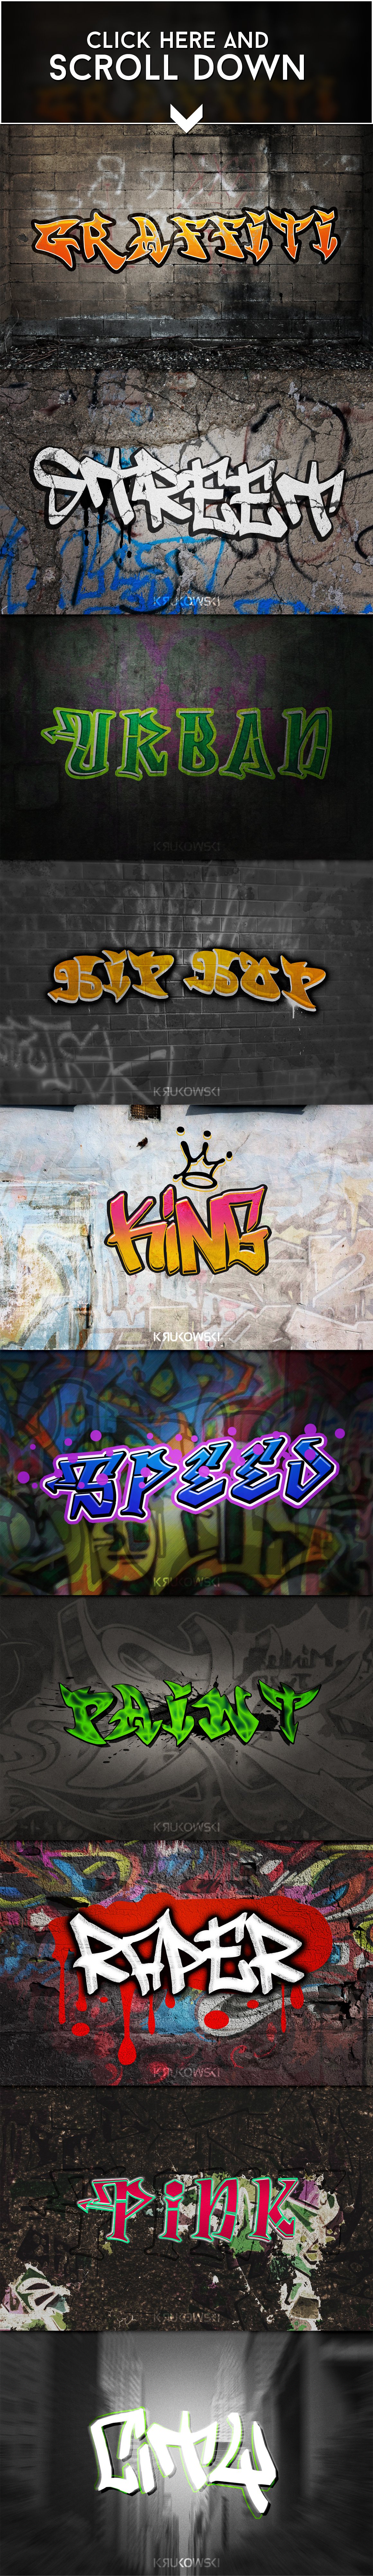 Graffiti Text Effectspreview image.